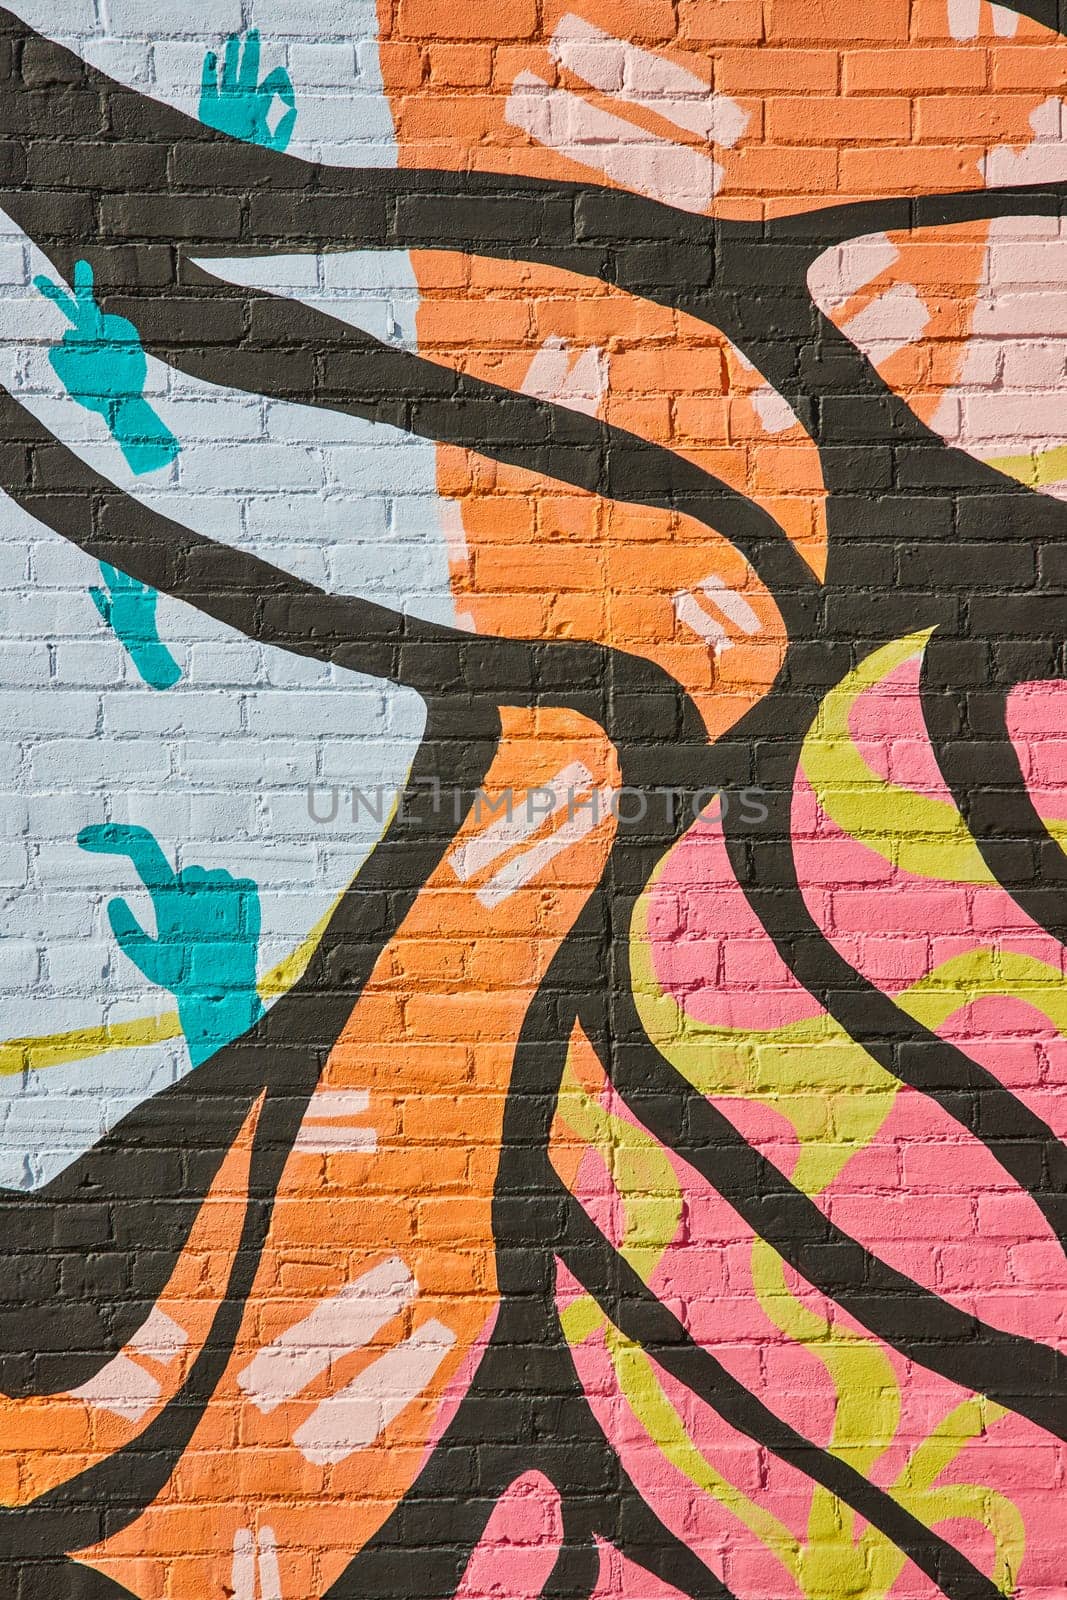 Colorful Graffiti Handprints on Brick Wall Mural by njproductions